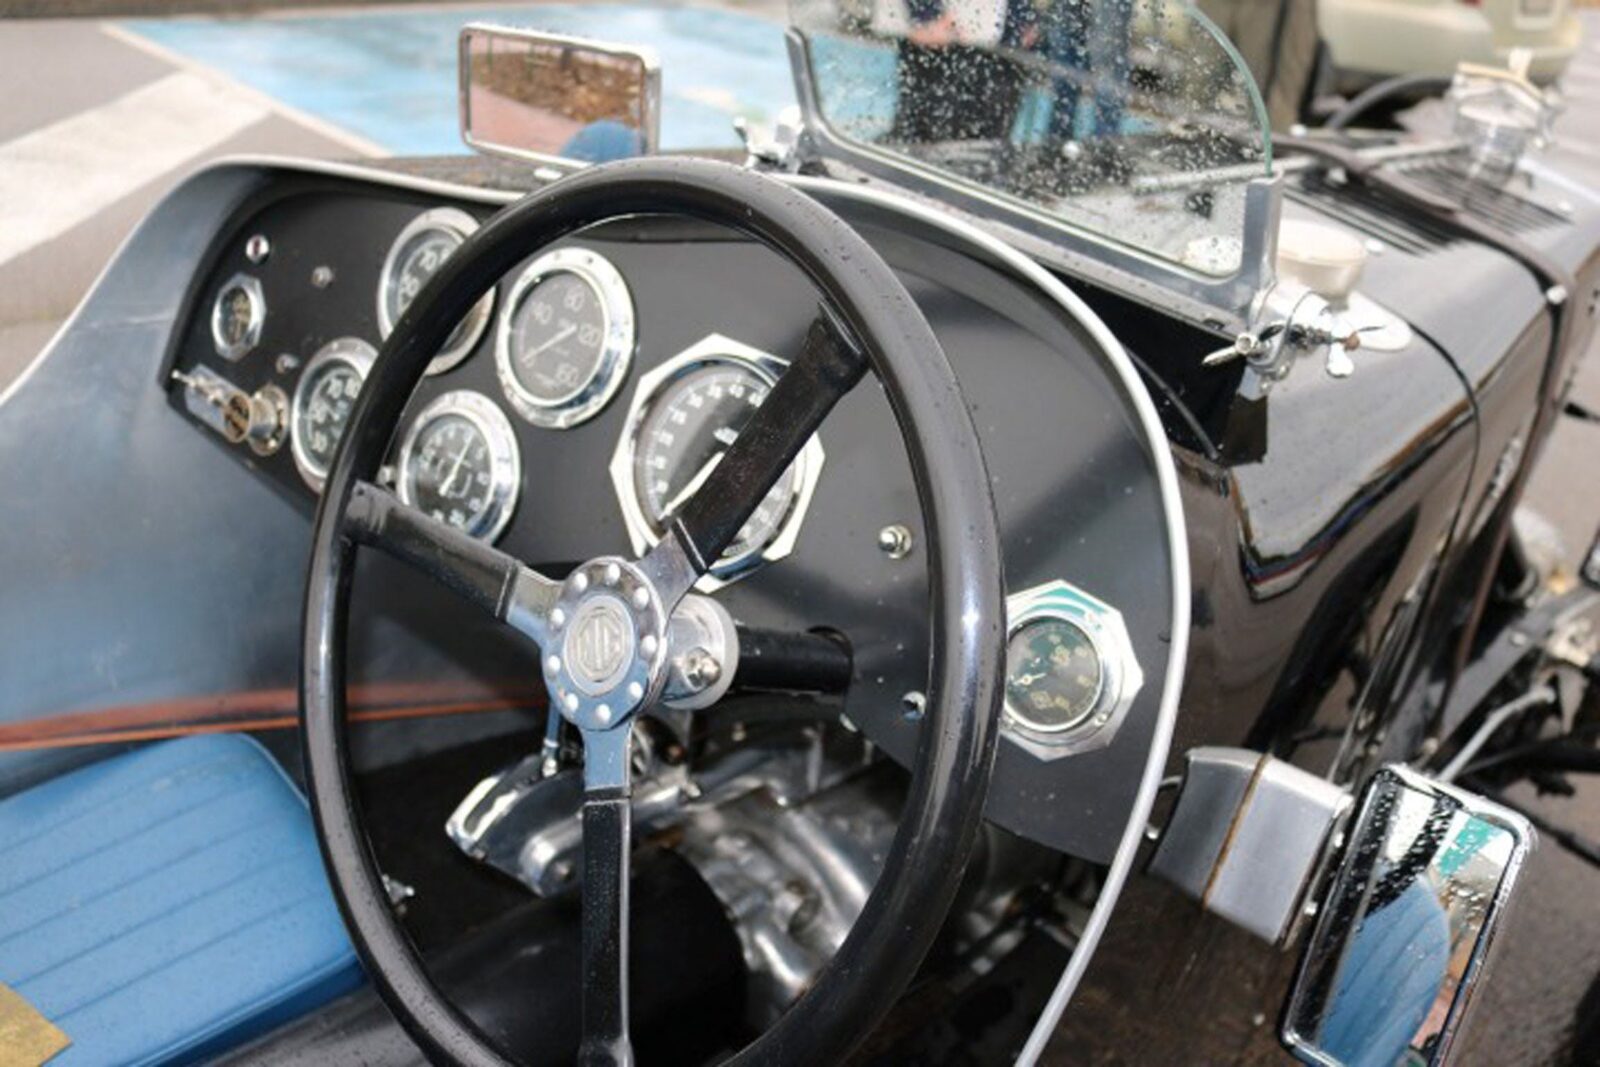 Interior of historic car